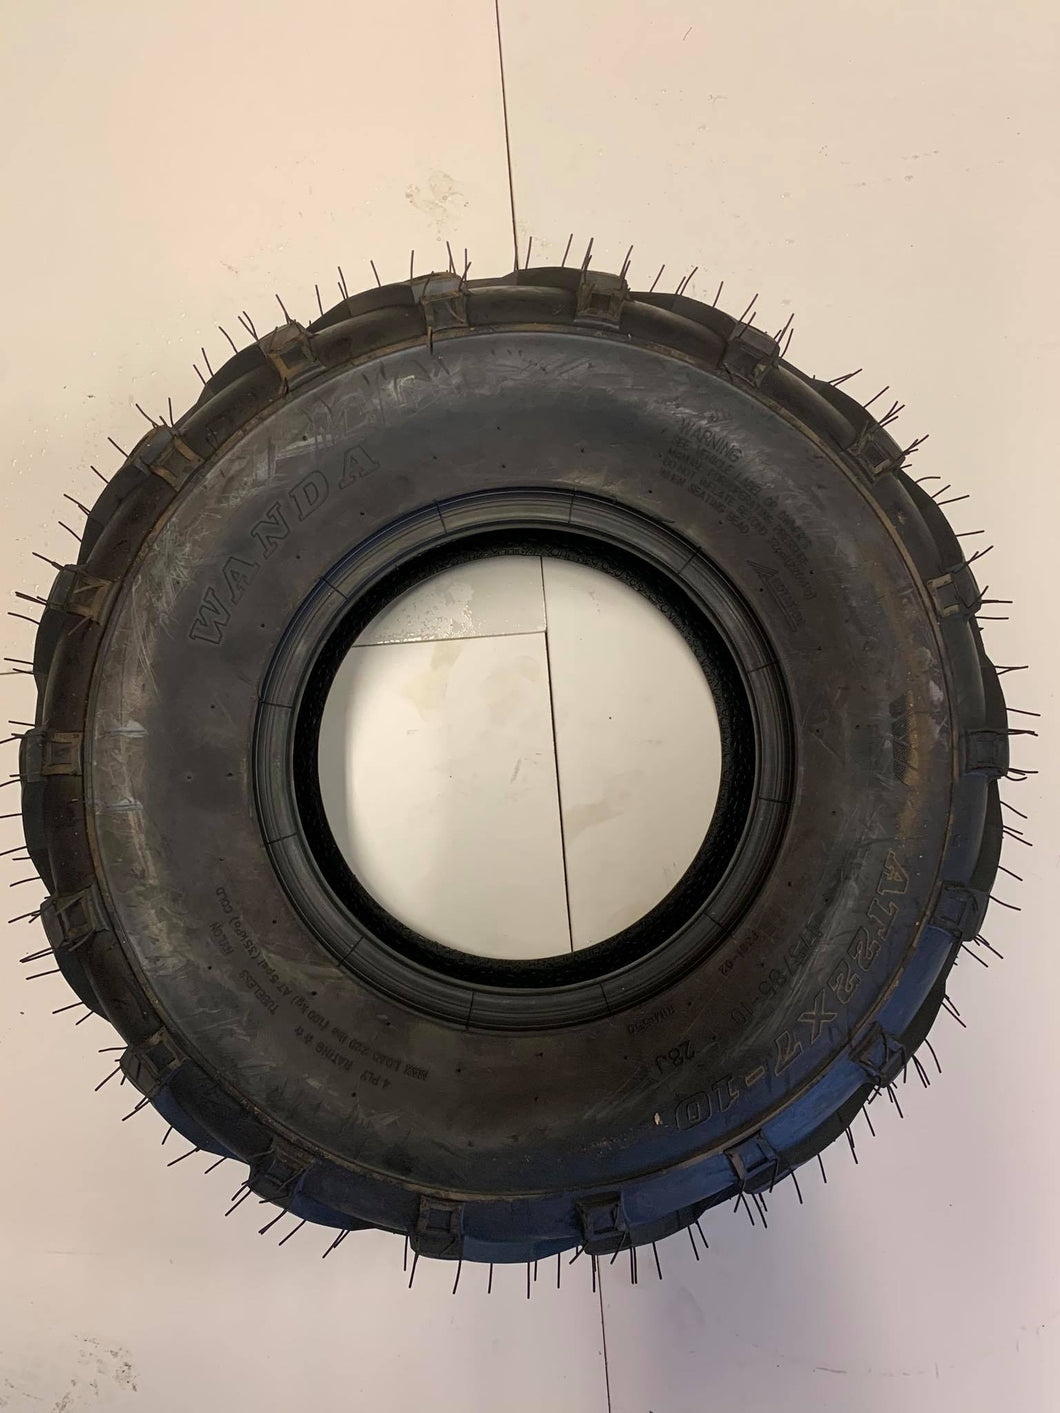 22/7/10 Wanda P361 Quad Tyre